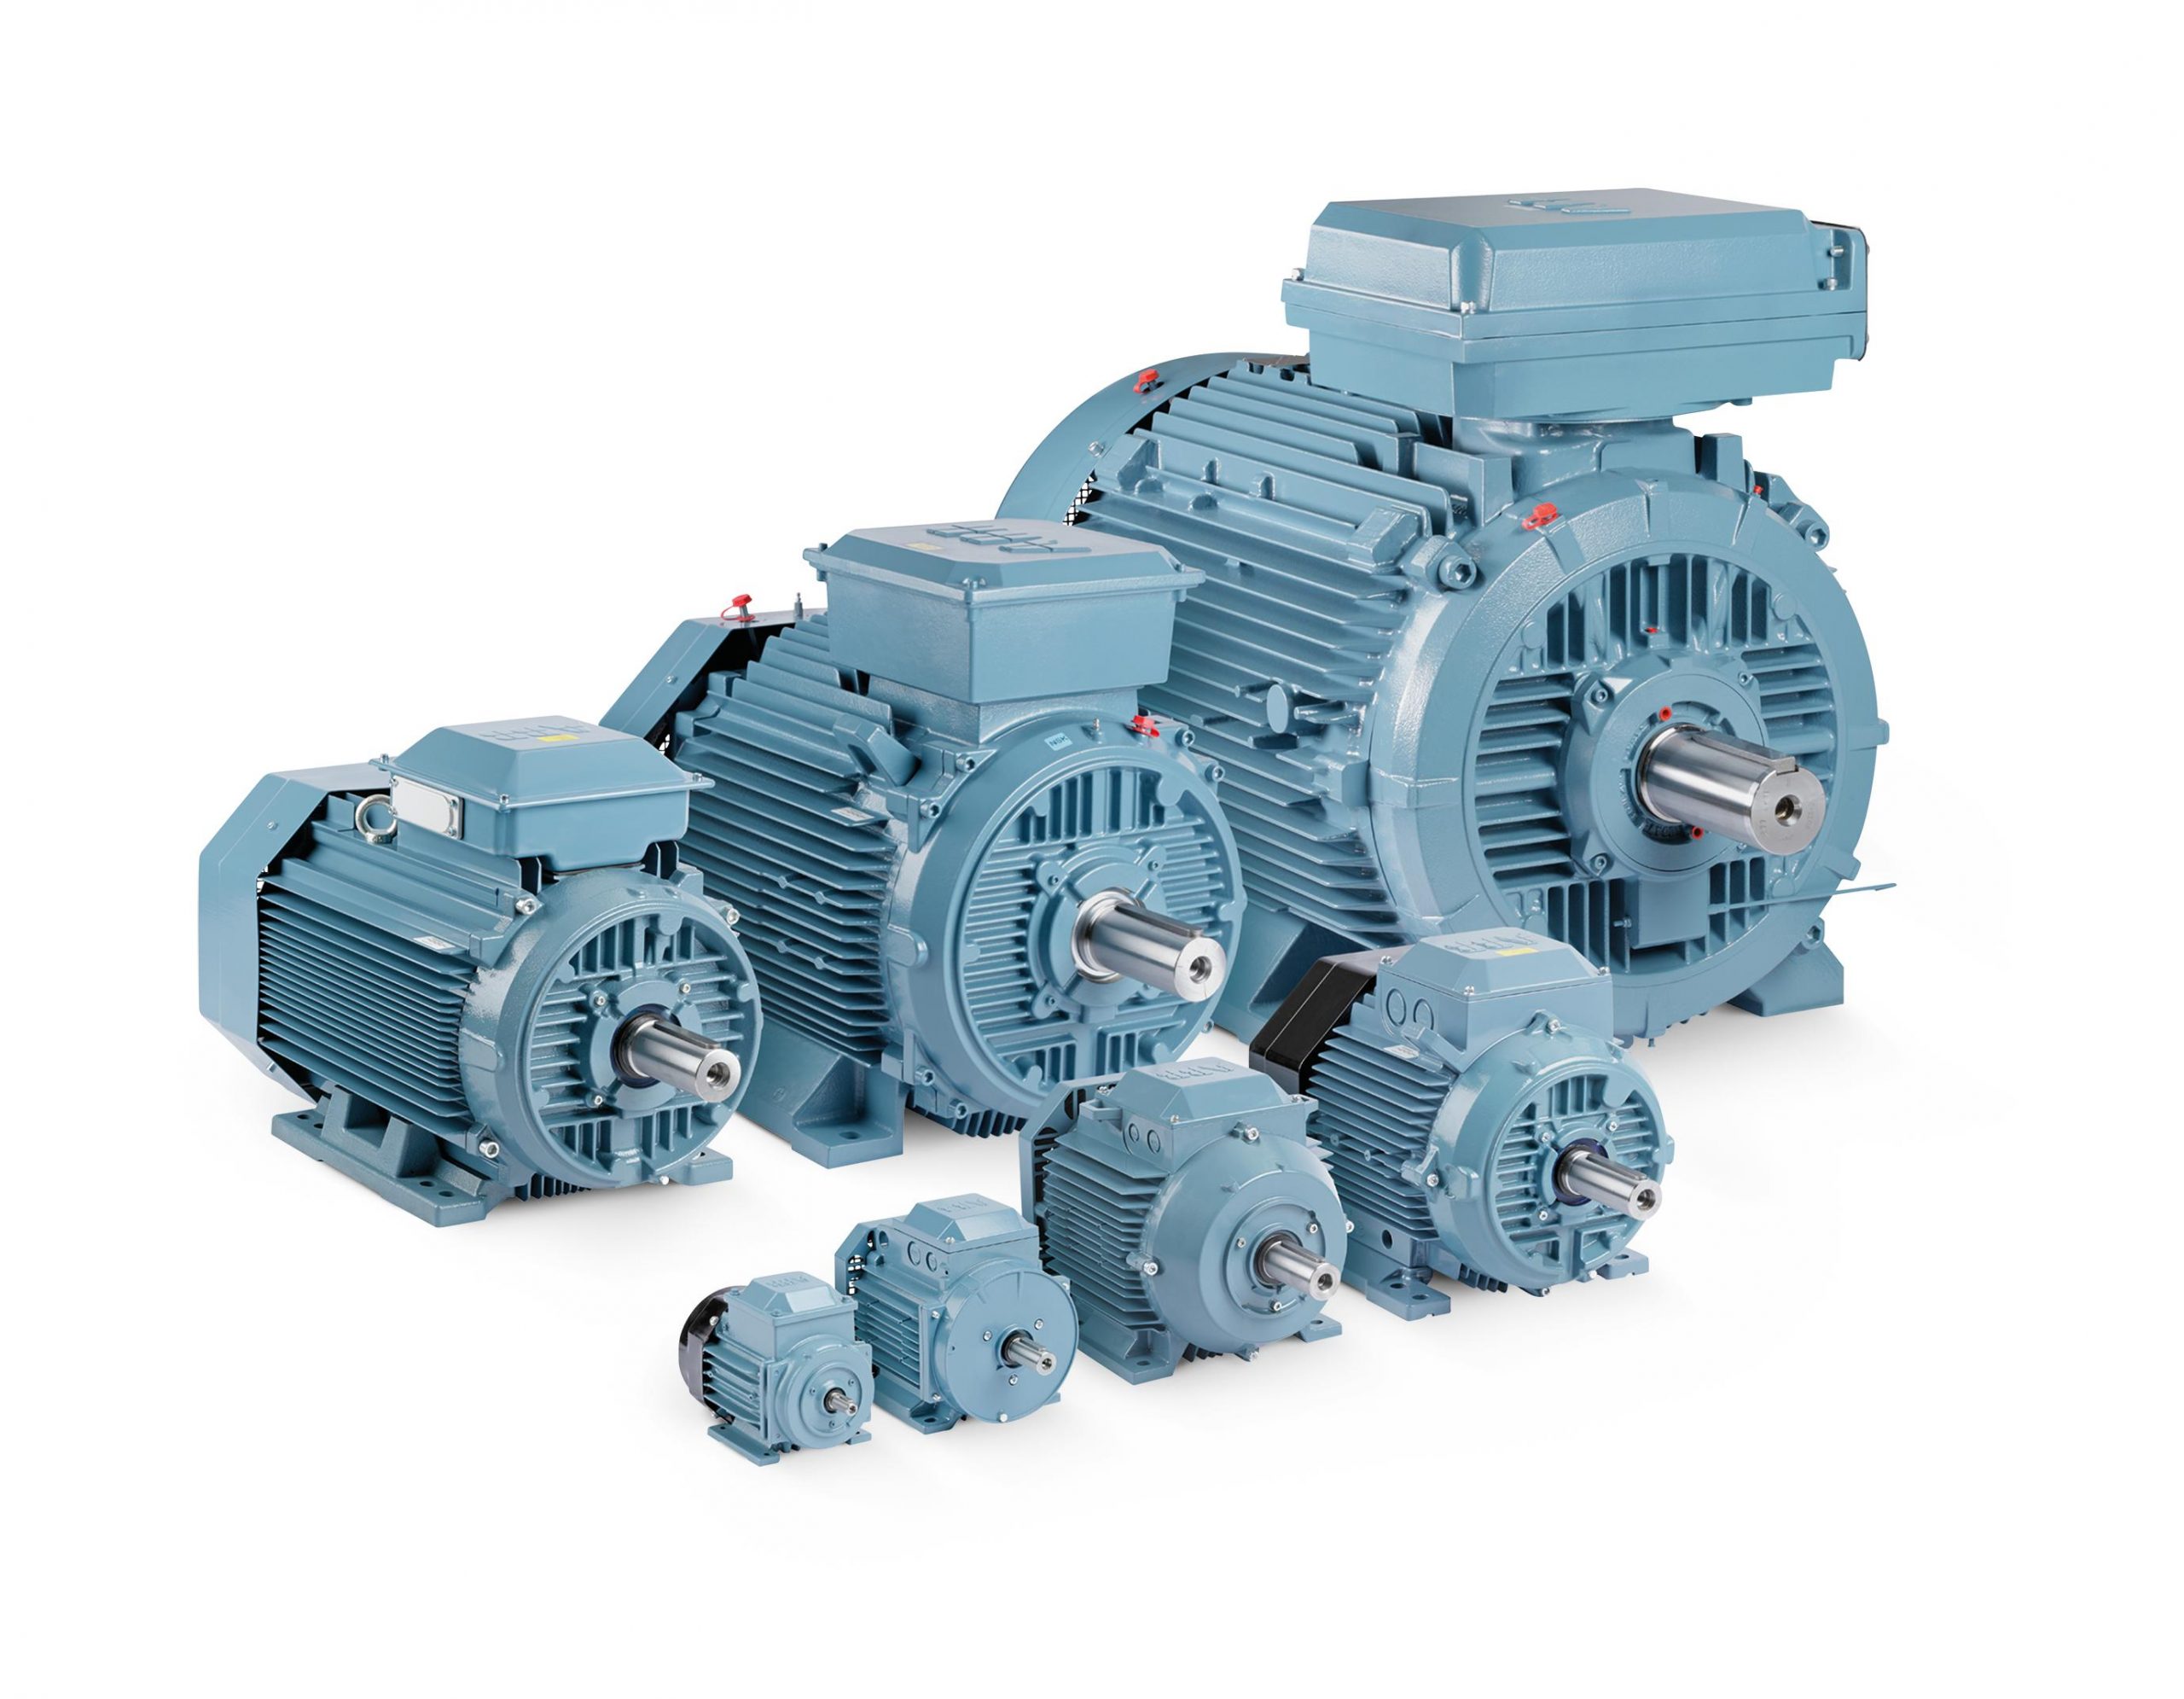 Baldor now offers a complete line of ABB IEC motors